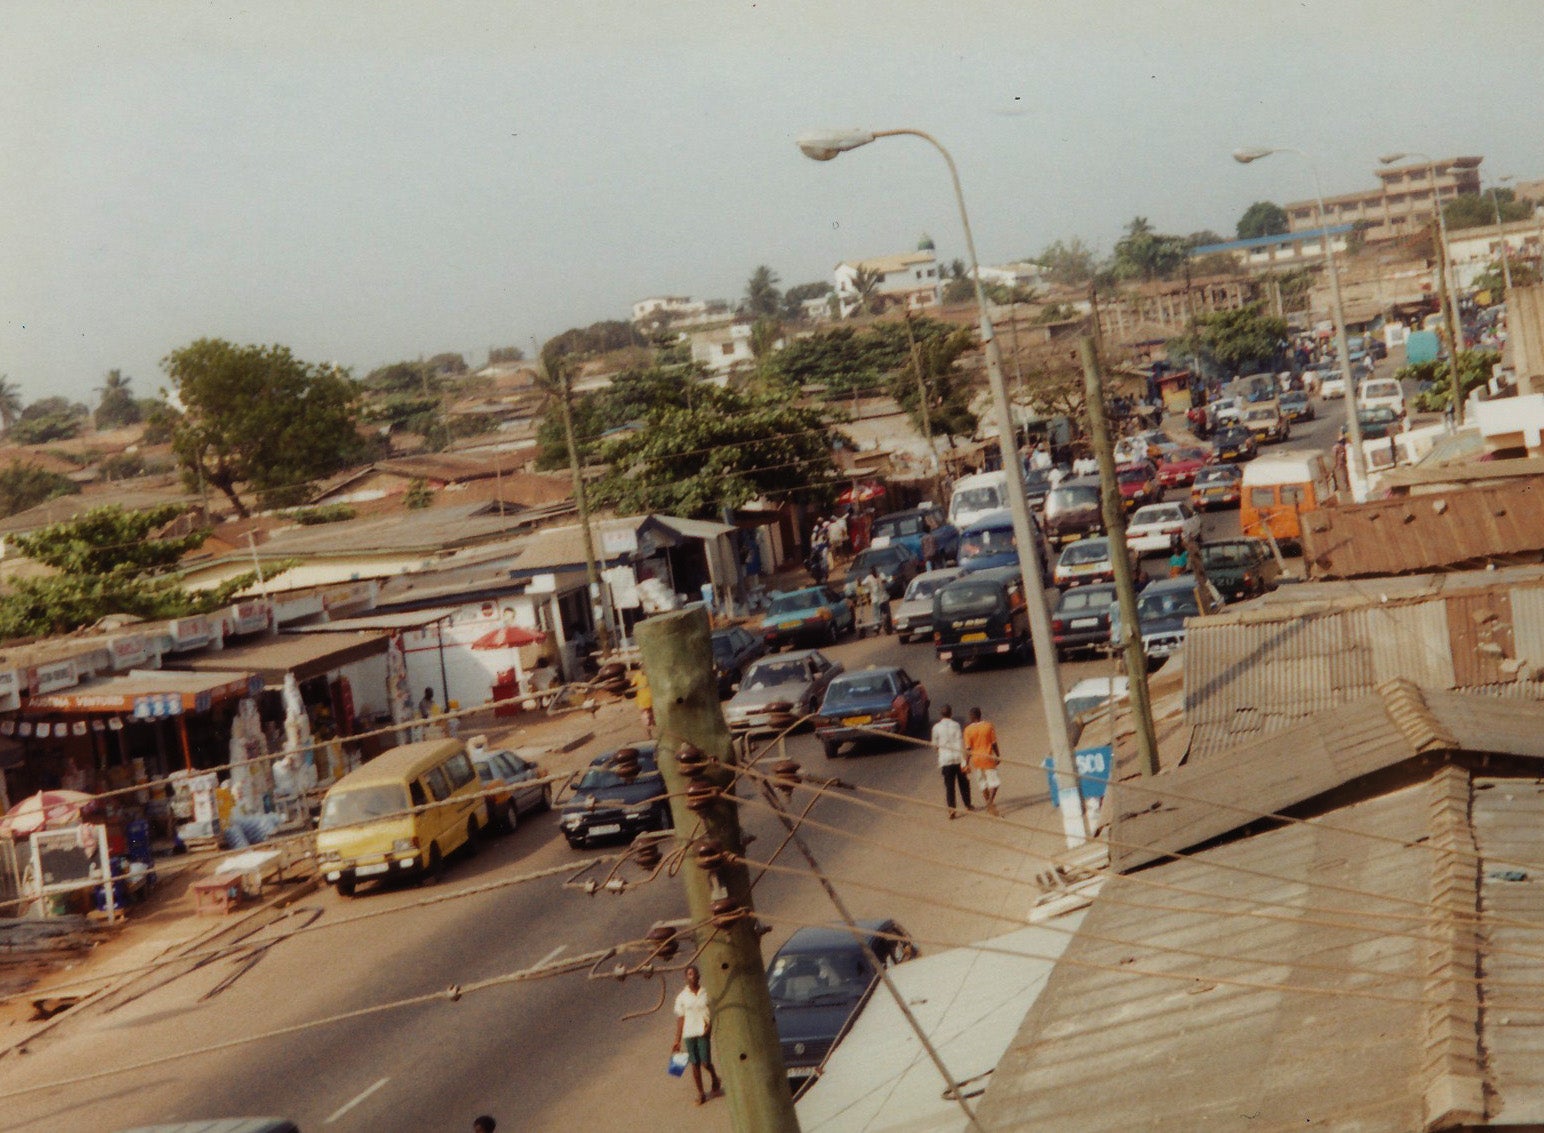 Corner of a city street in Ghana